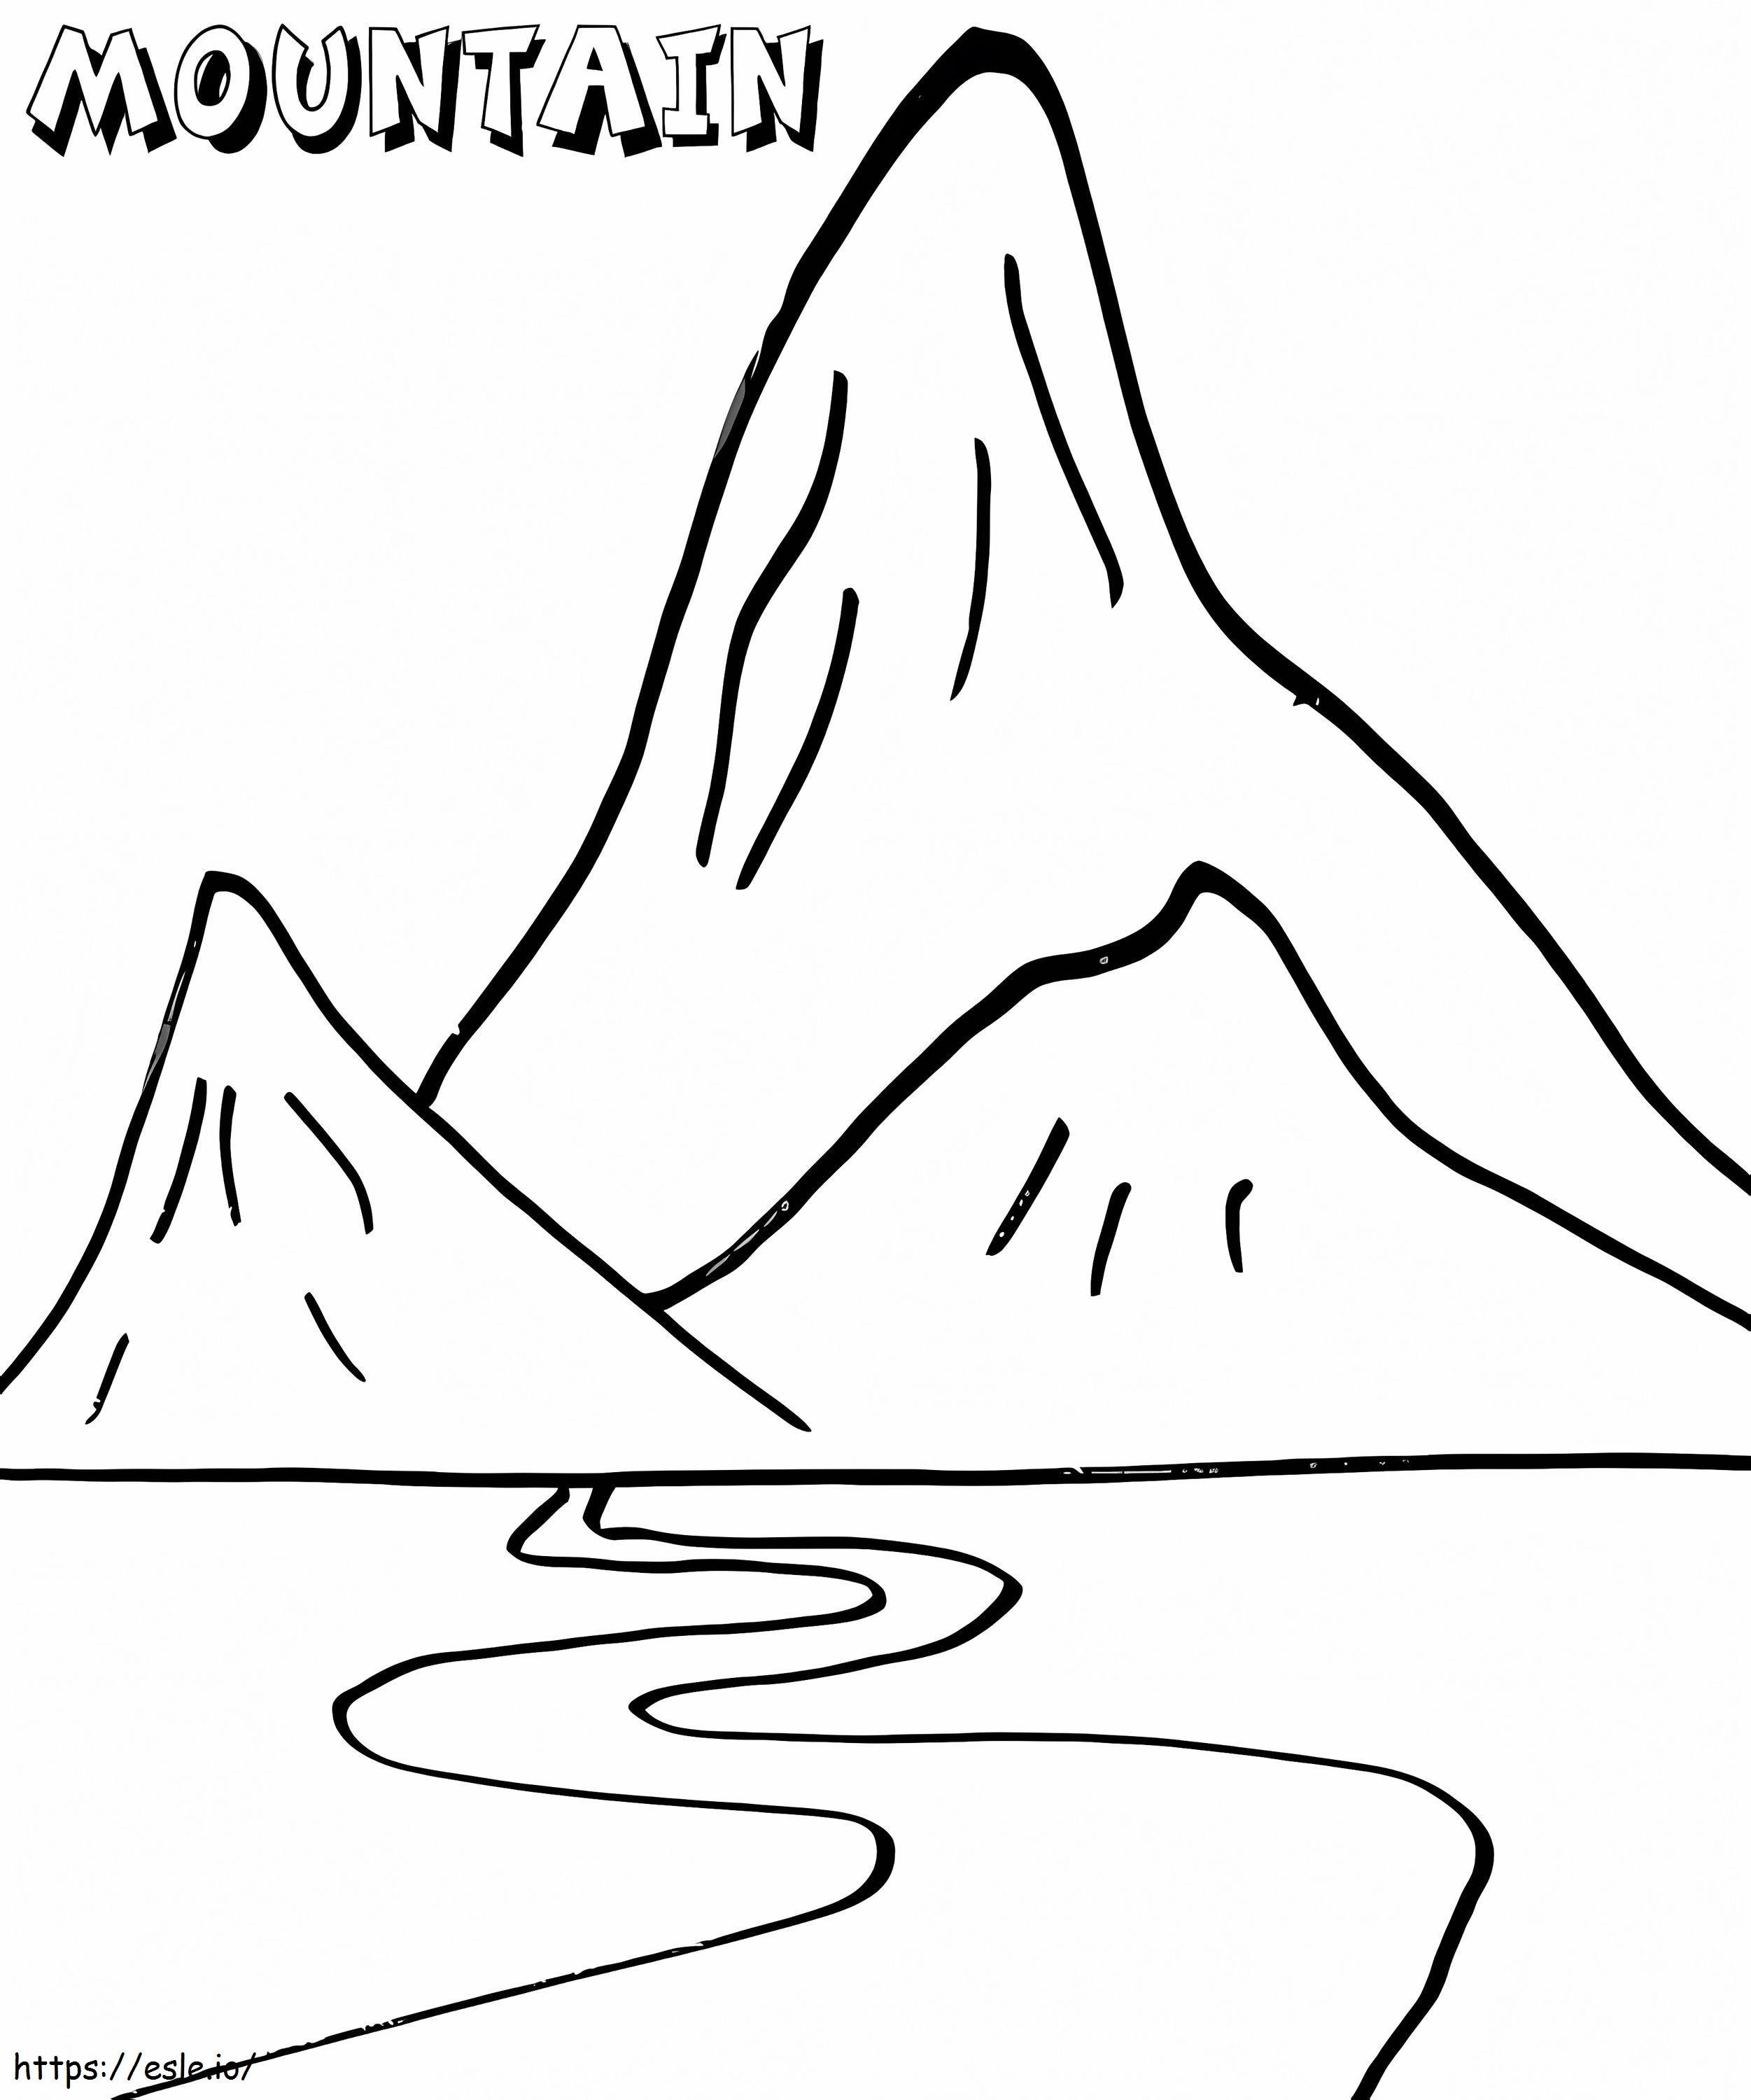 Tiga Gunung Gambar Mewarnai